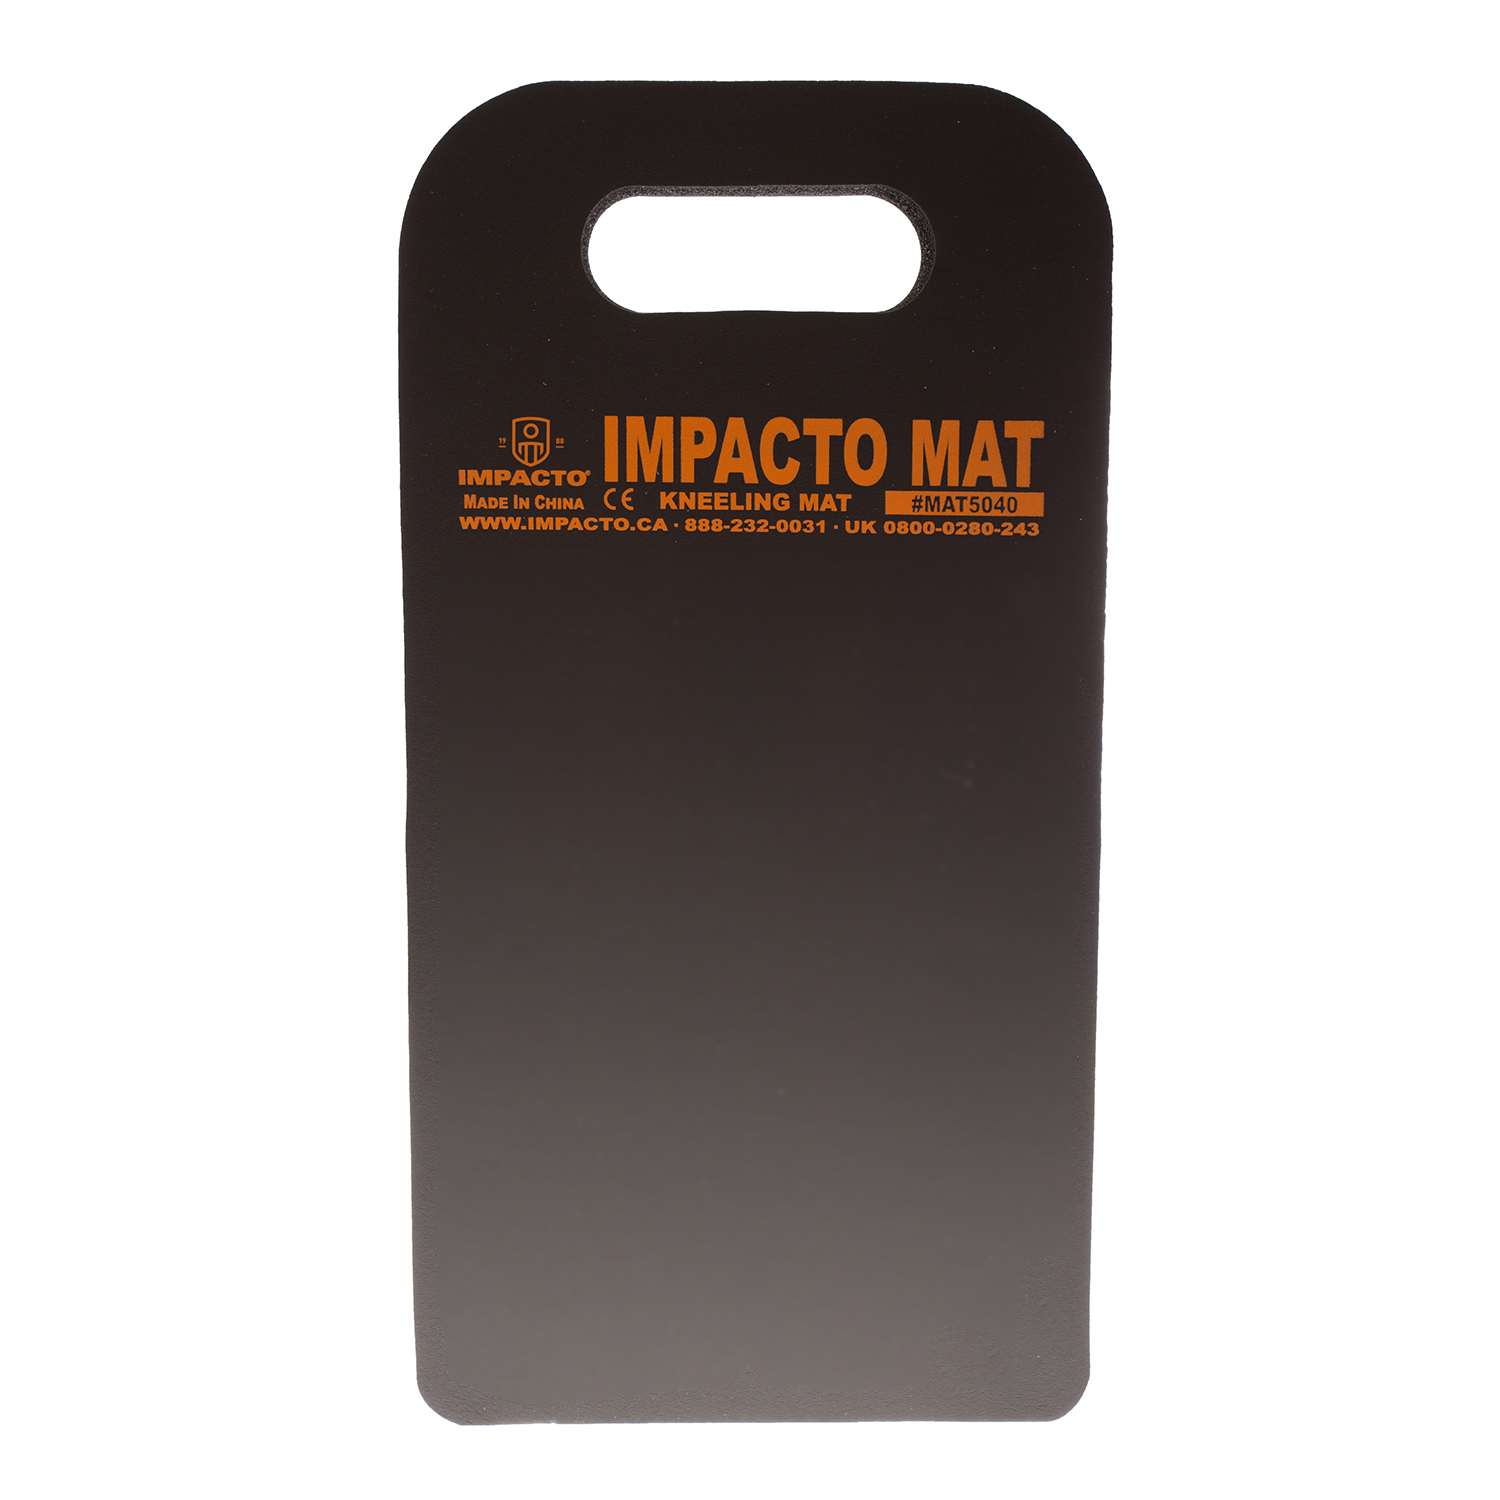 IMPACTO MAT 8X16 KNEELING LIQUID RESISTANT - Mats/Flooring